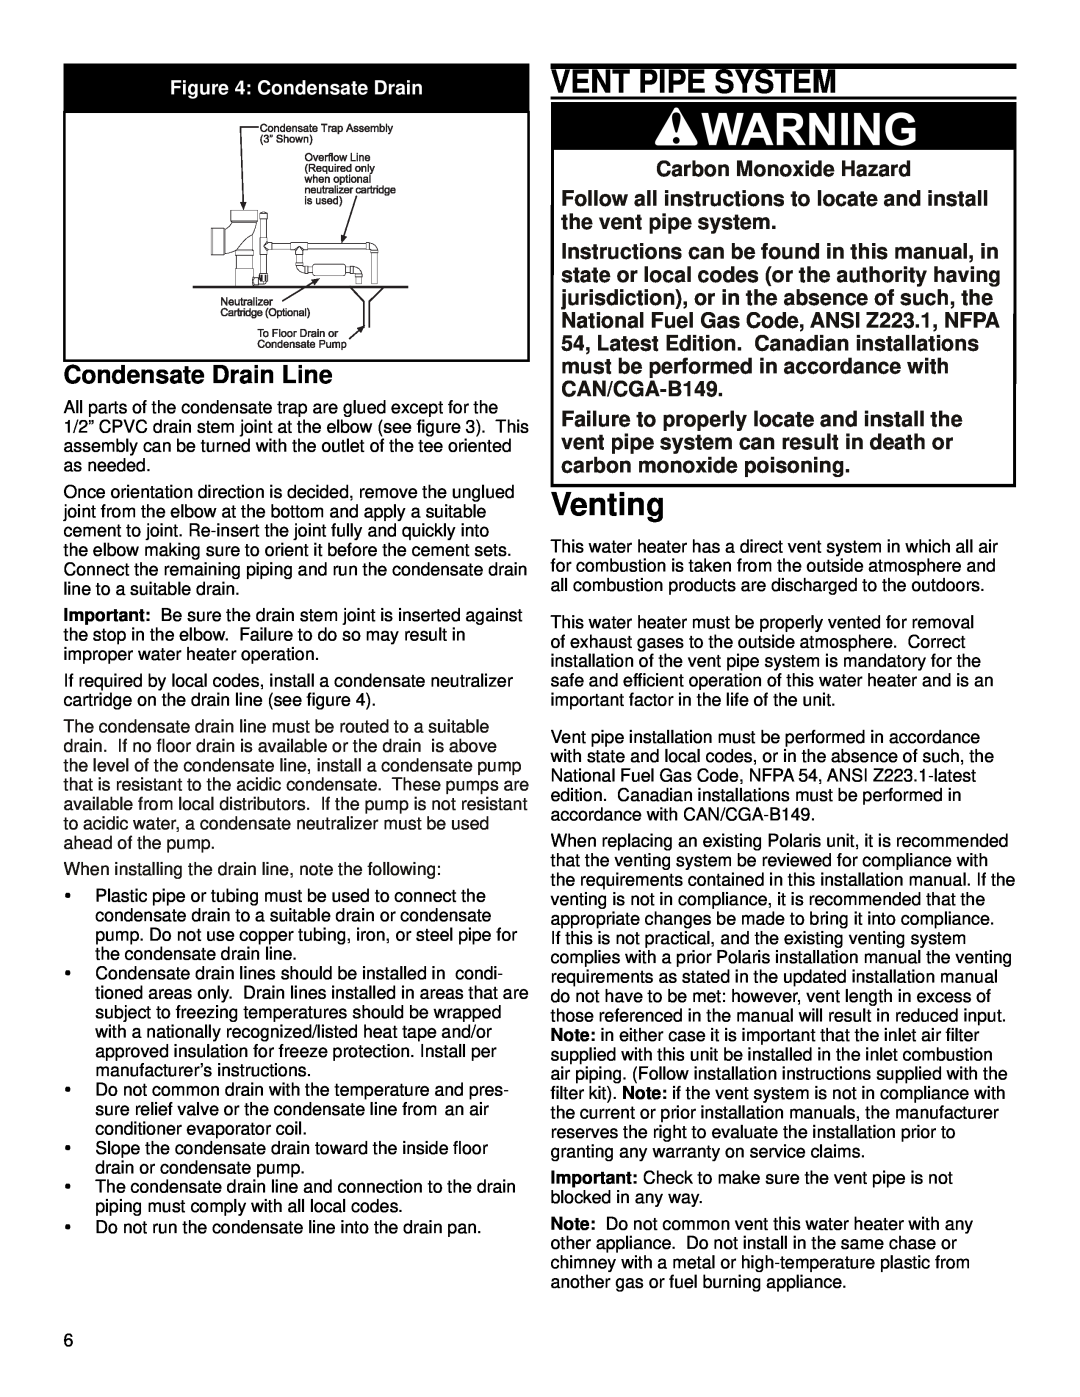 American International PR 130-34 2NV or 2PV manual Venting, Condensate Drain Line, Carbon Monoxide Hazard, Vent Pipe System 